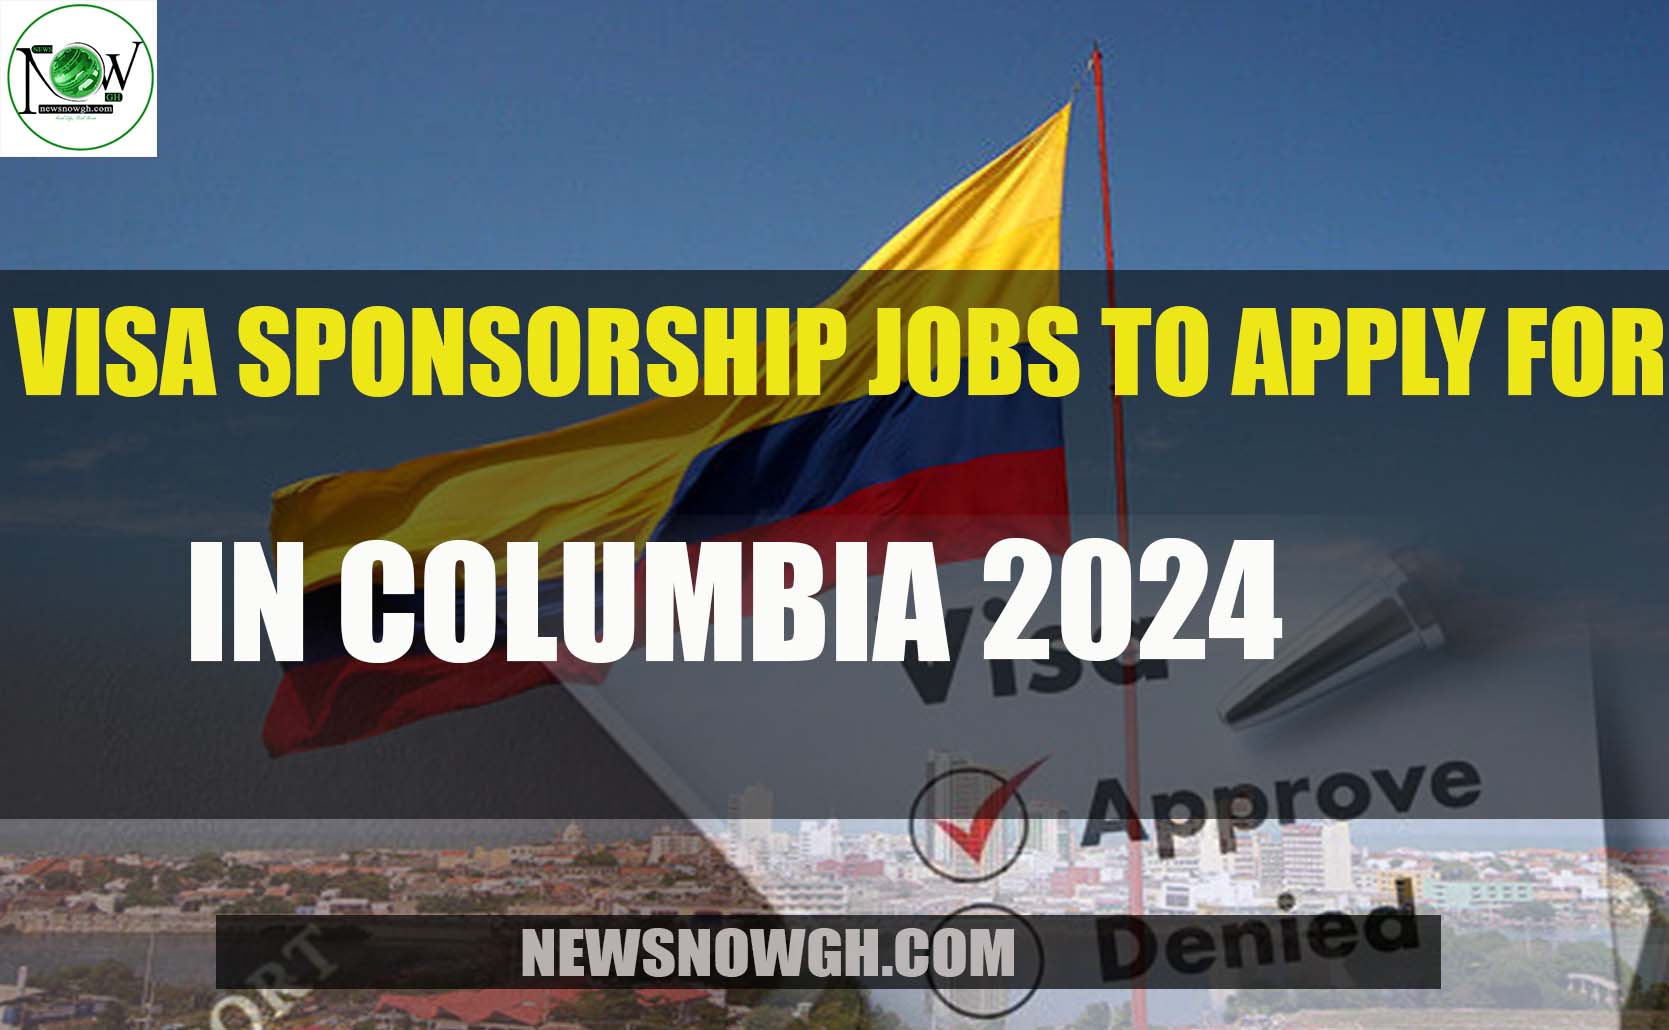 Visa Sponsorship Jobs to Apply for in Columbia 2024